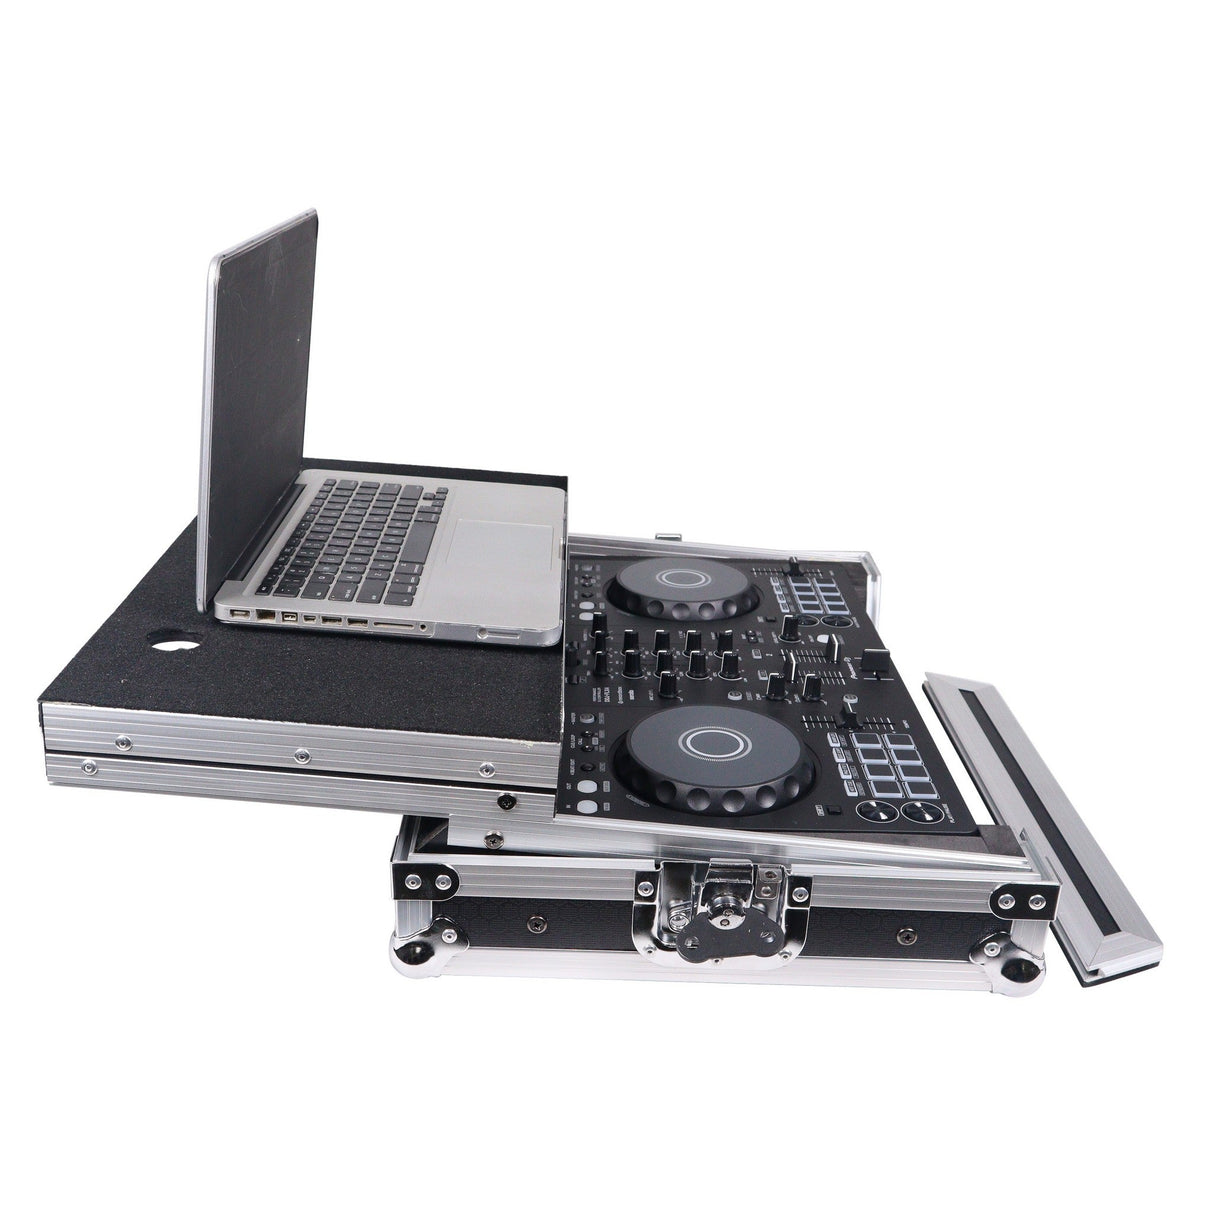 ProX X-DDJFLX4 Case for Pioneer DJ DDJ-FLX4, DDJ-400, and DDJ-SB3 DJ Controller